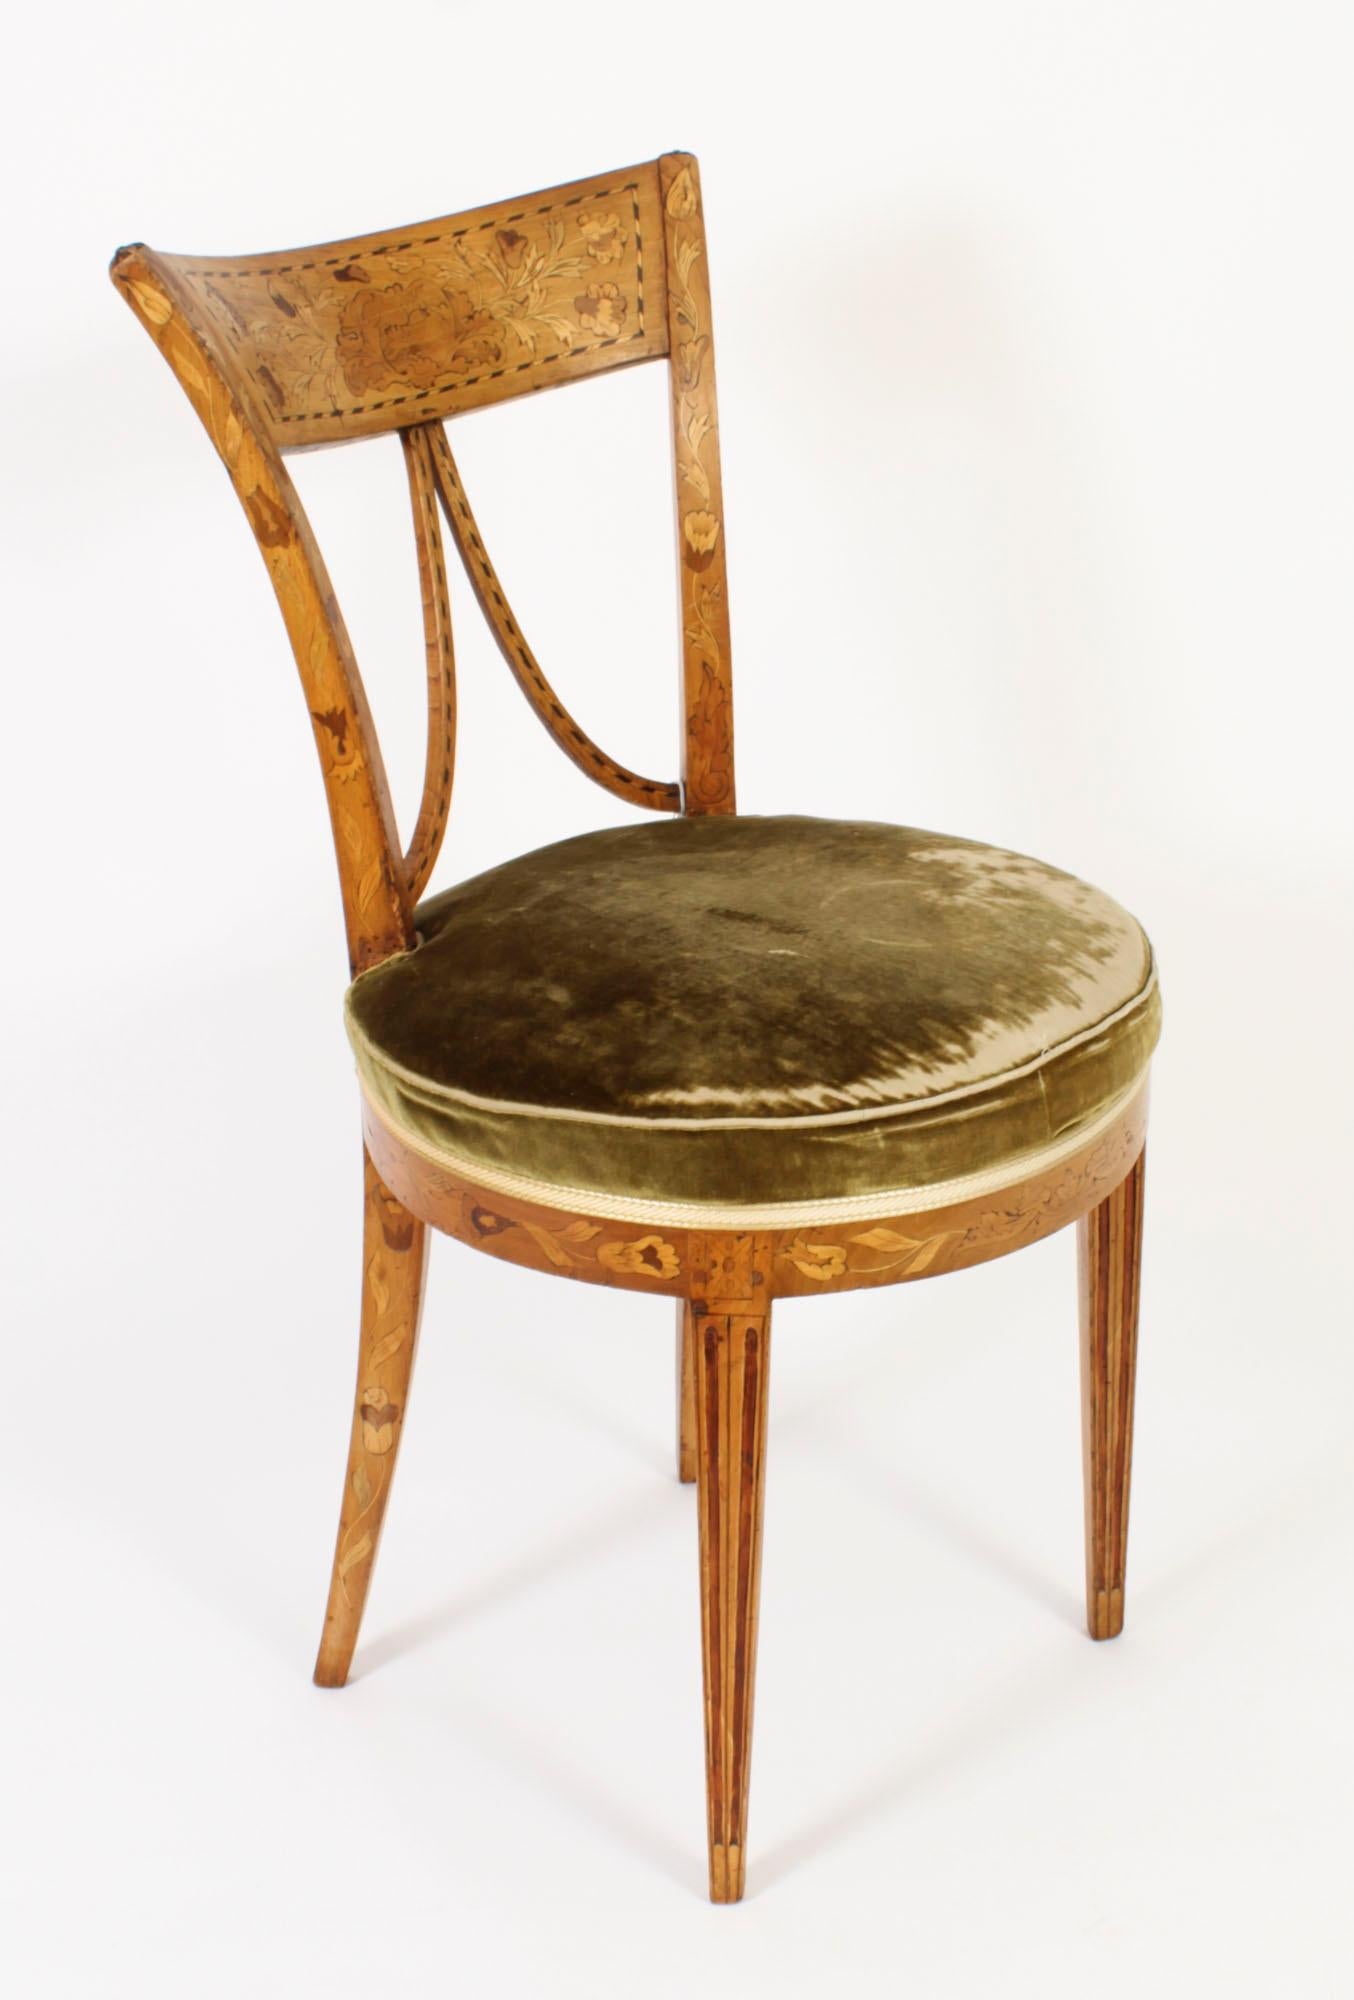 Antique Dutch Satinwood Marquetry Desk Chair 19th Century 13